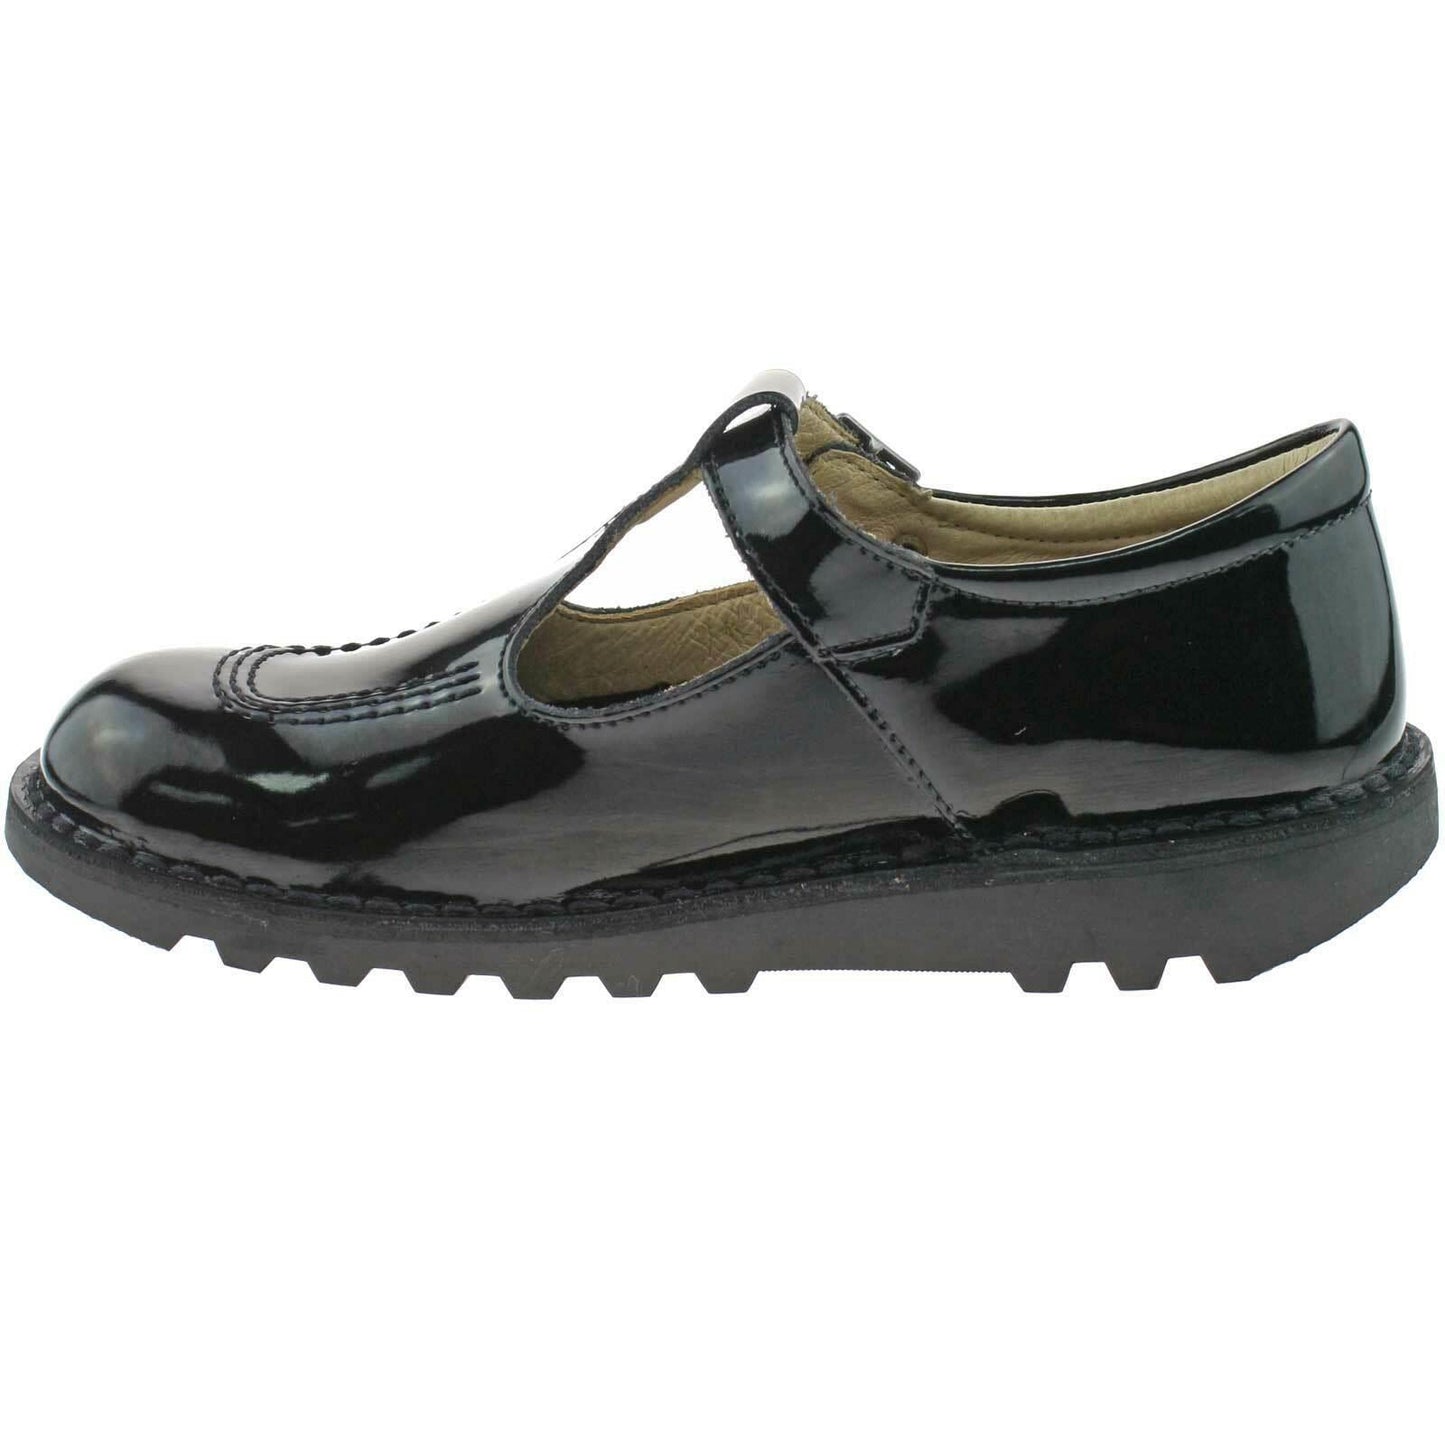 Girls Junior Kickers Kick T Black Patent Leather School Shoes 1-12533